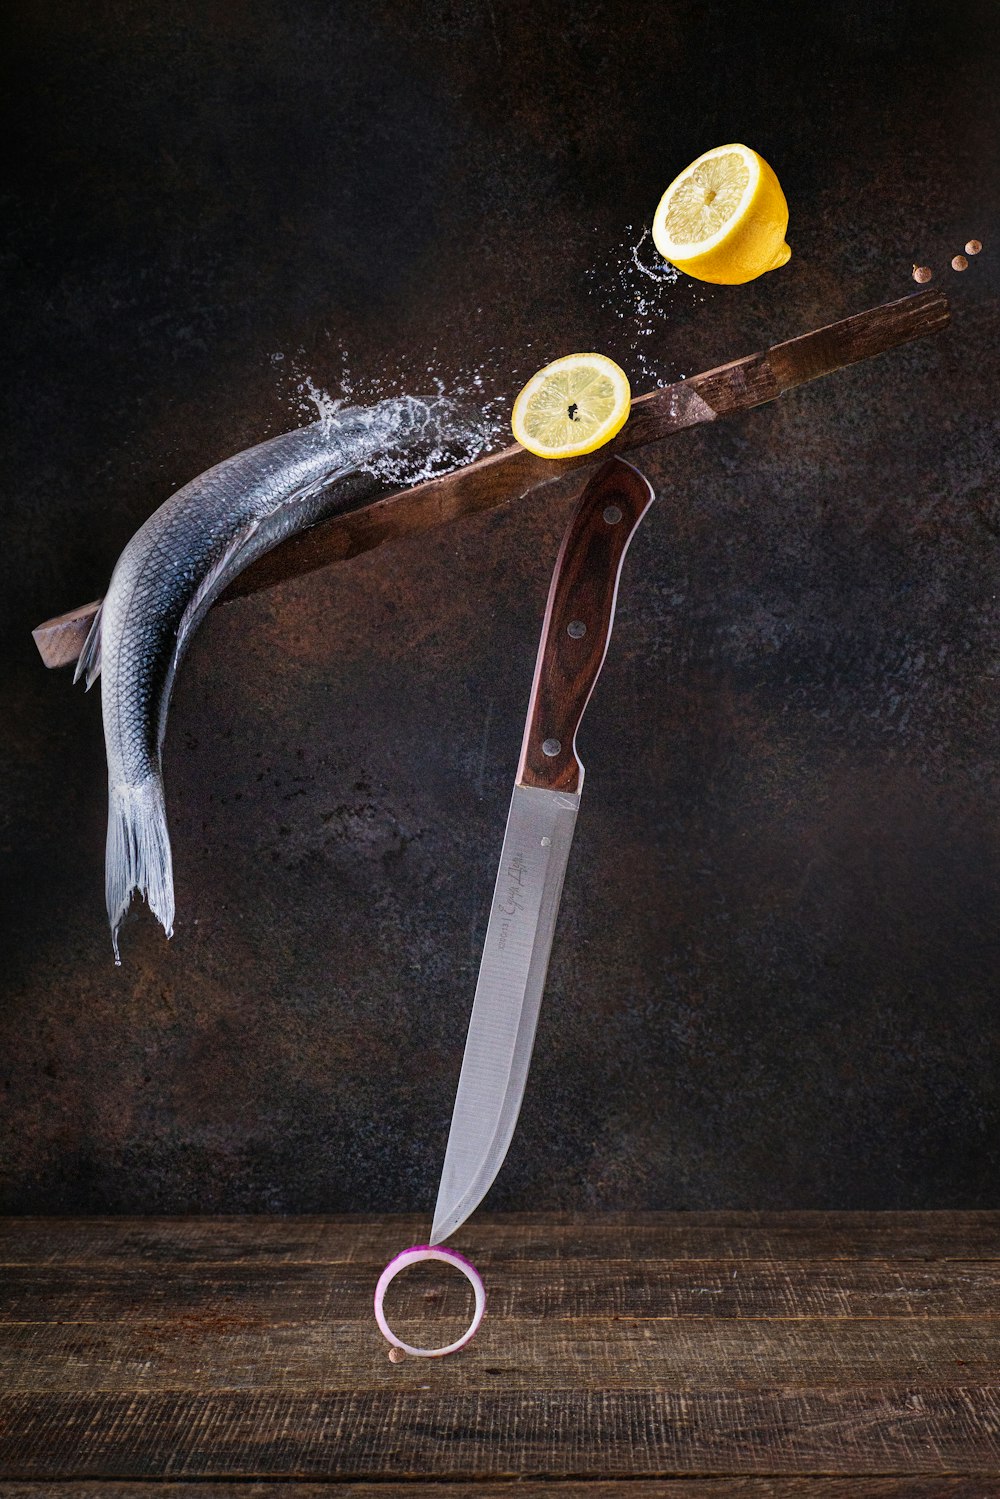 a knife and a lemon on a table